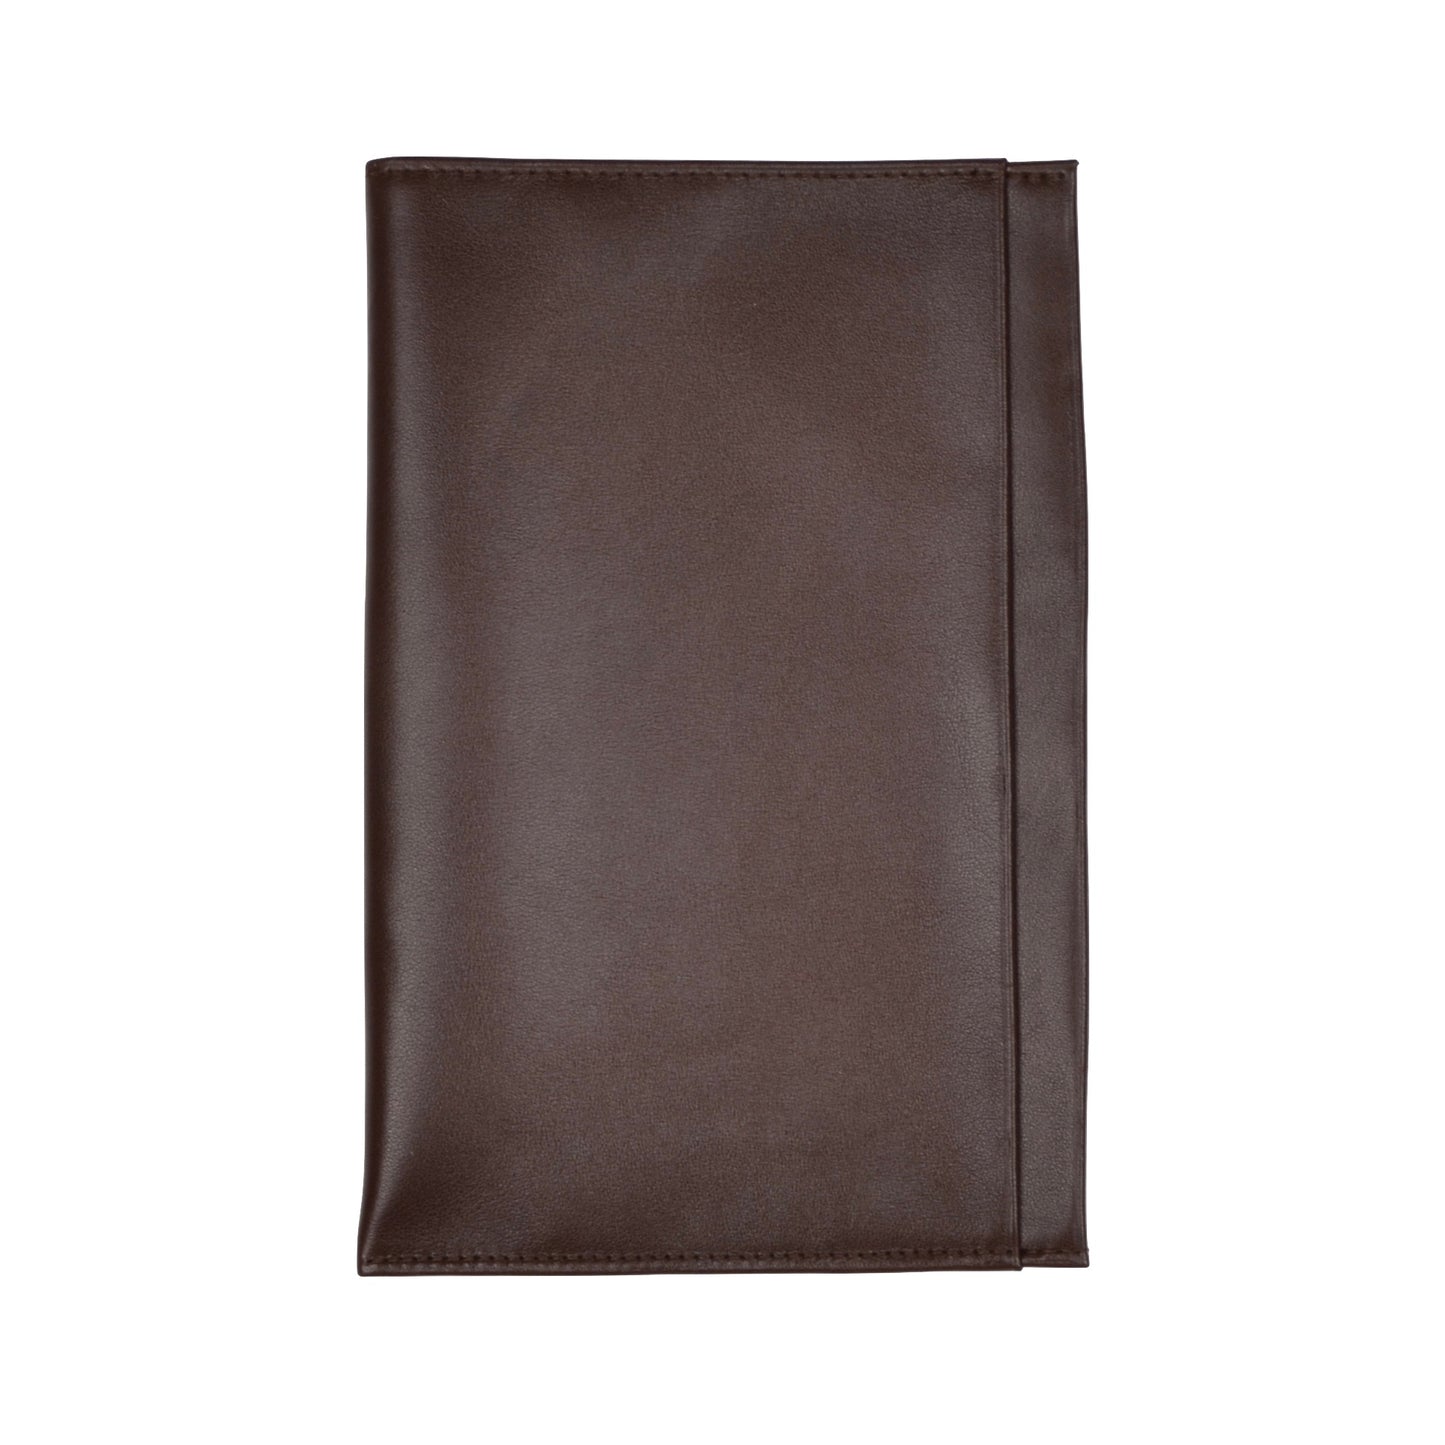 Becker Handmade Leather Passport Case/Wallet - Brown